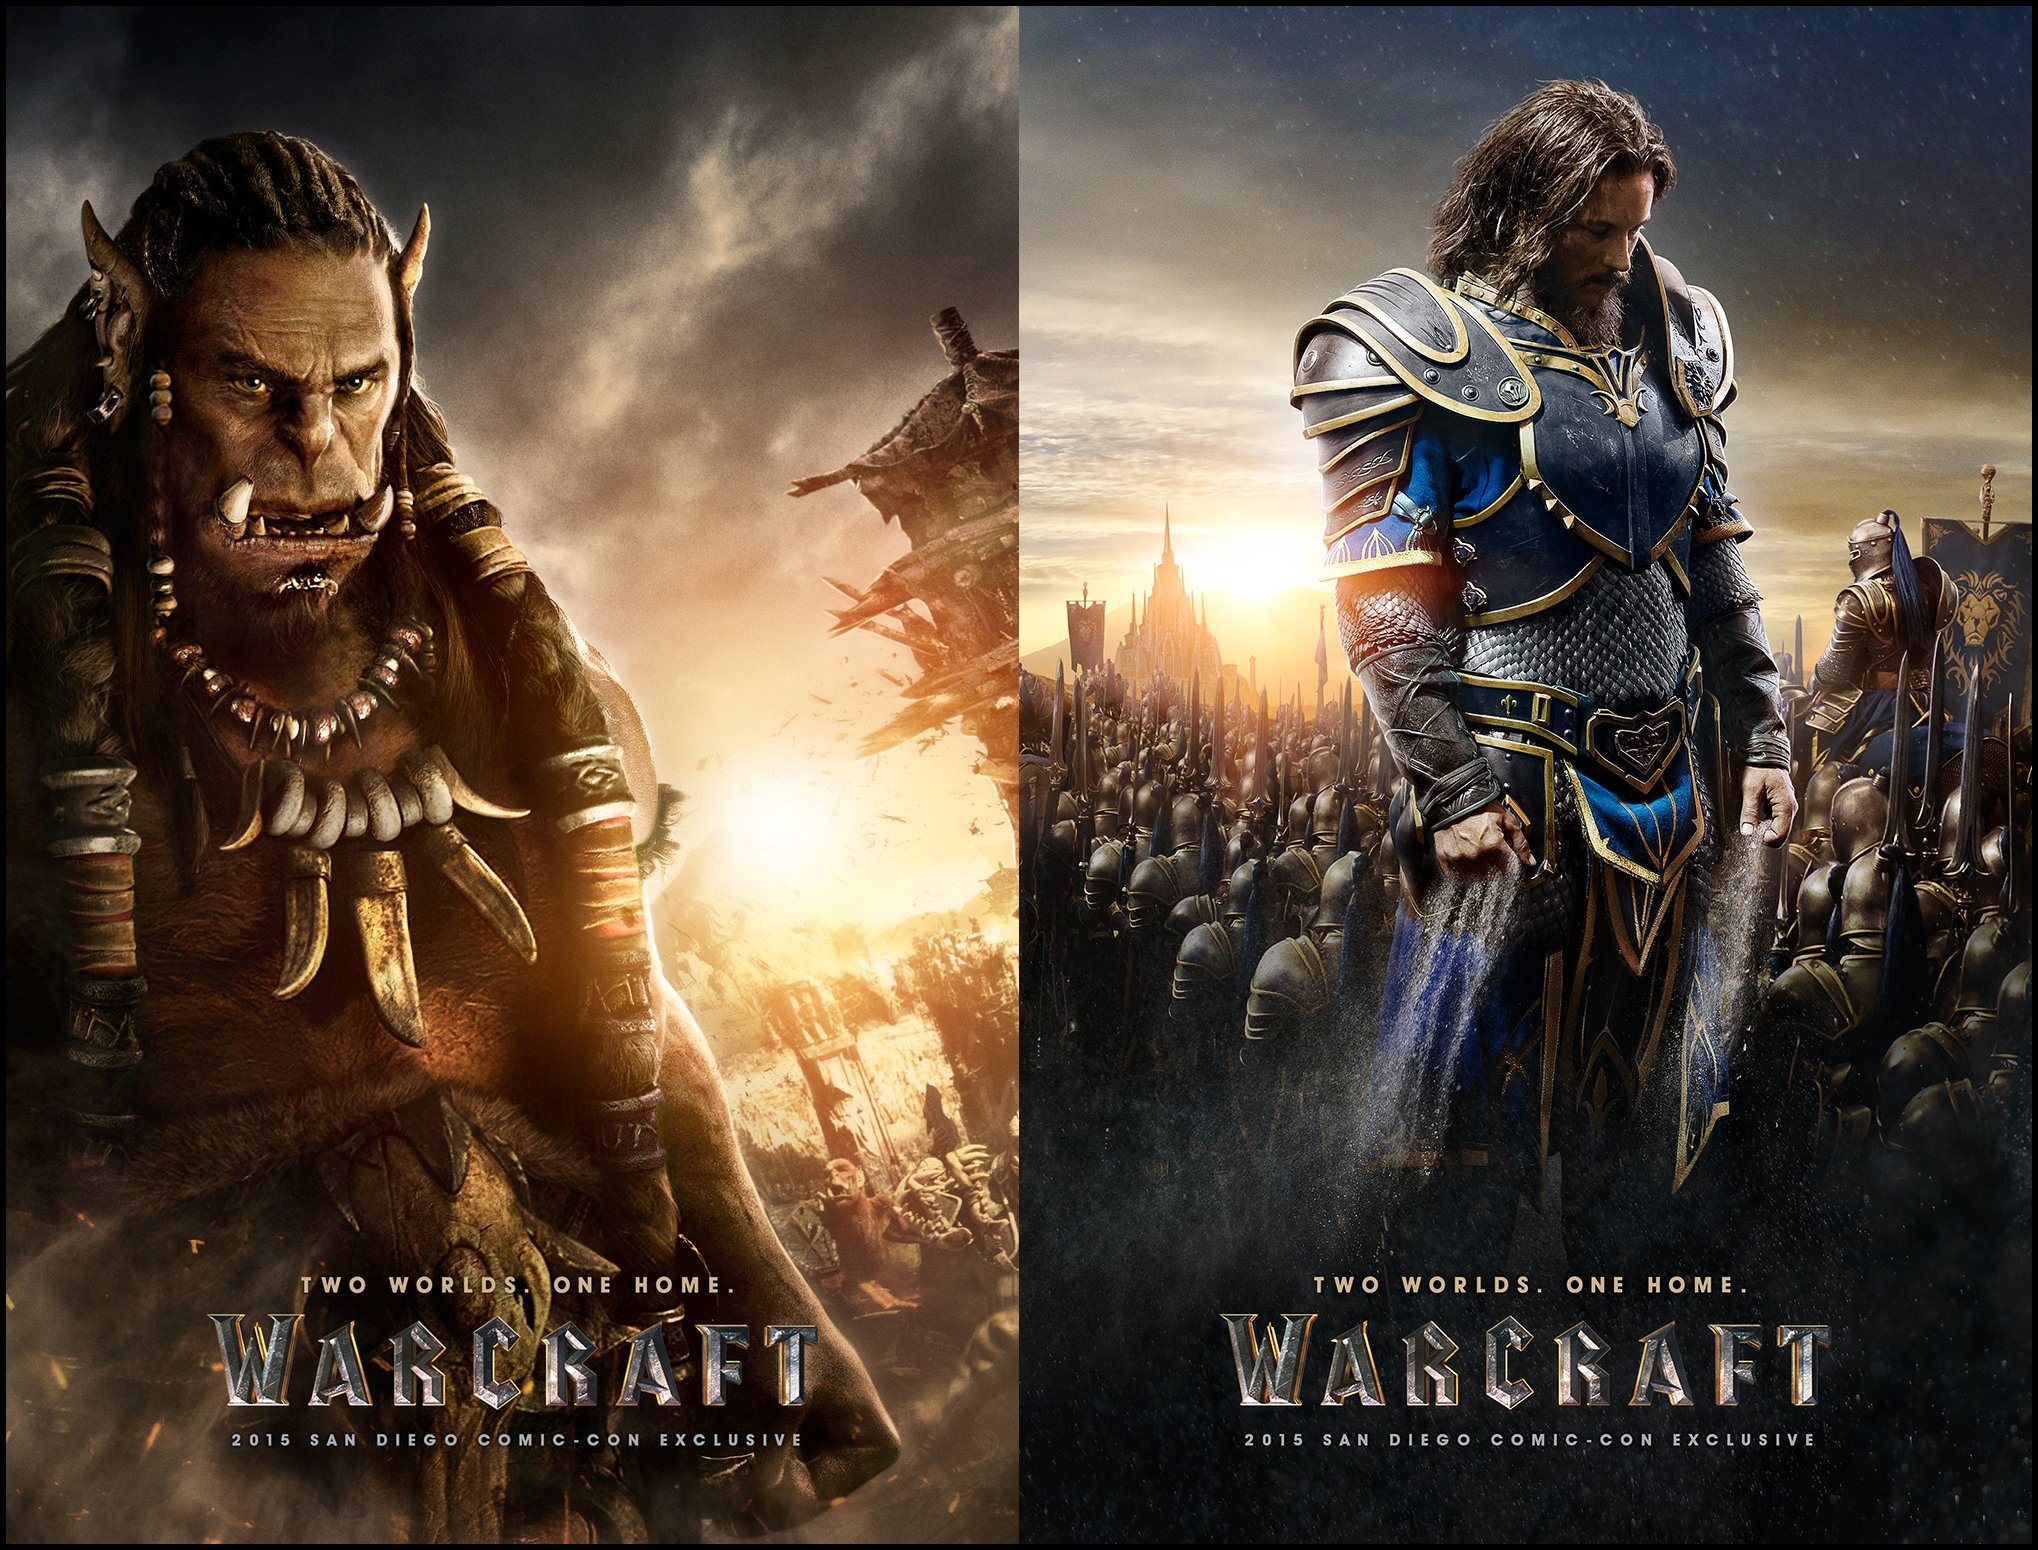 warcraft, Beginning, Fantasy, Action, Fighting, Warrior, Adventure, World, 1wcraft, Monster, Creature, Ogre, Knight, Armor, Poster Wallpaper